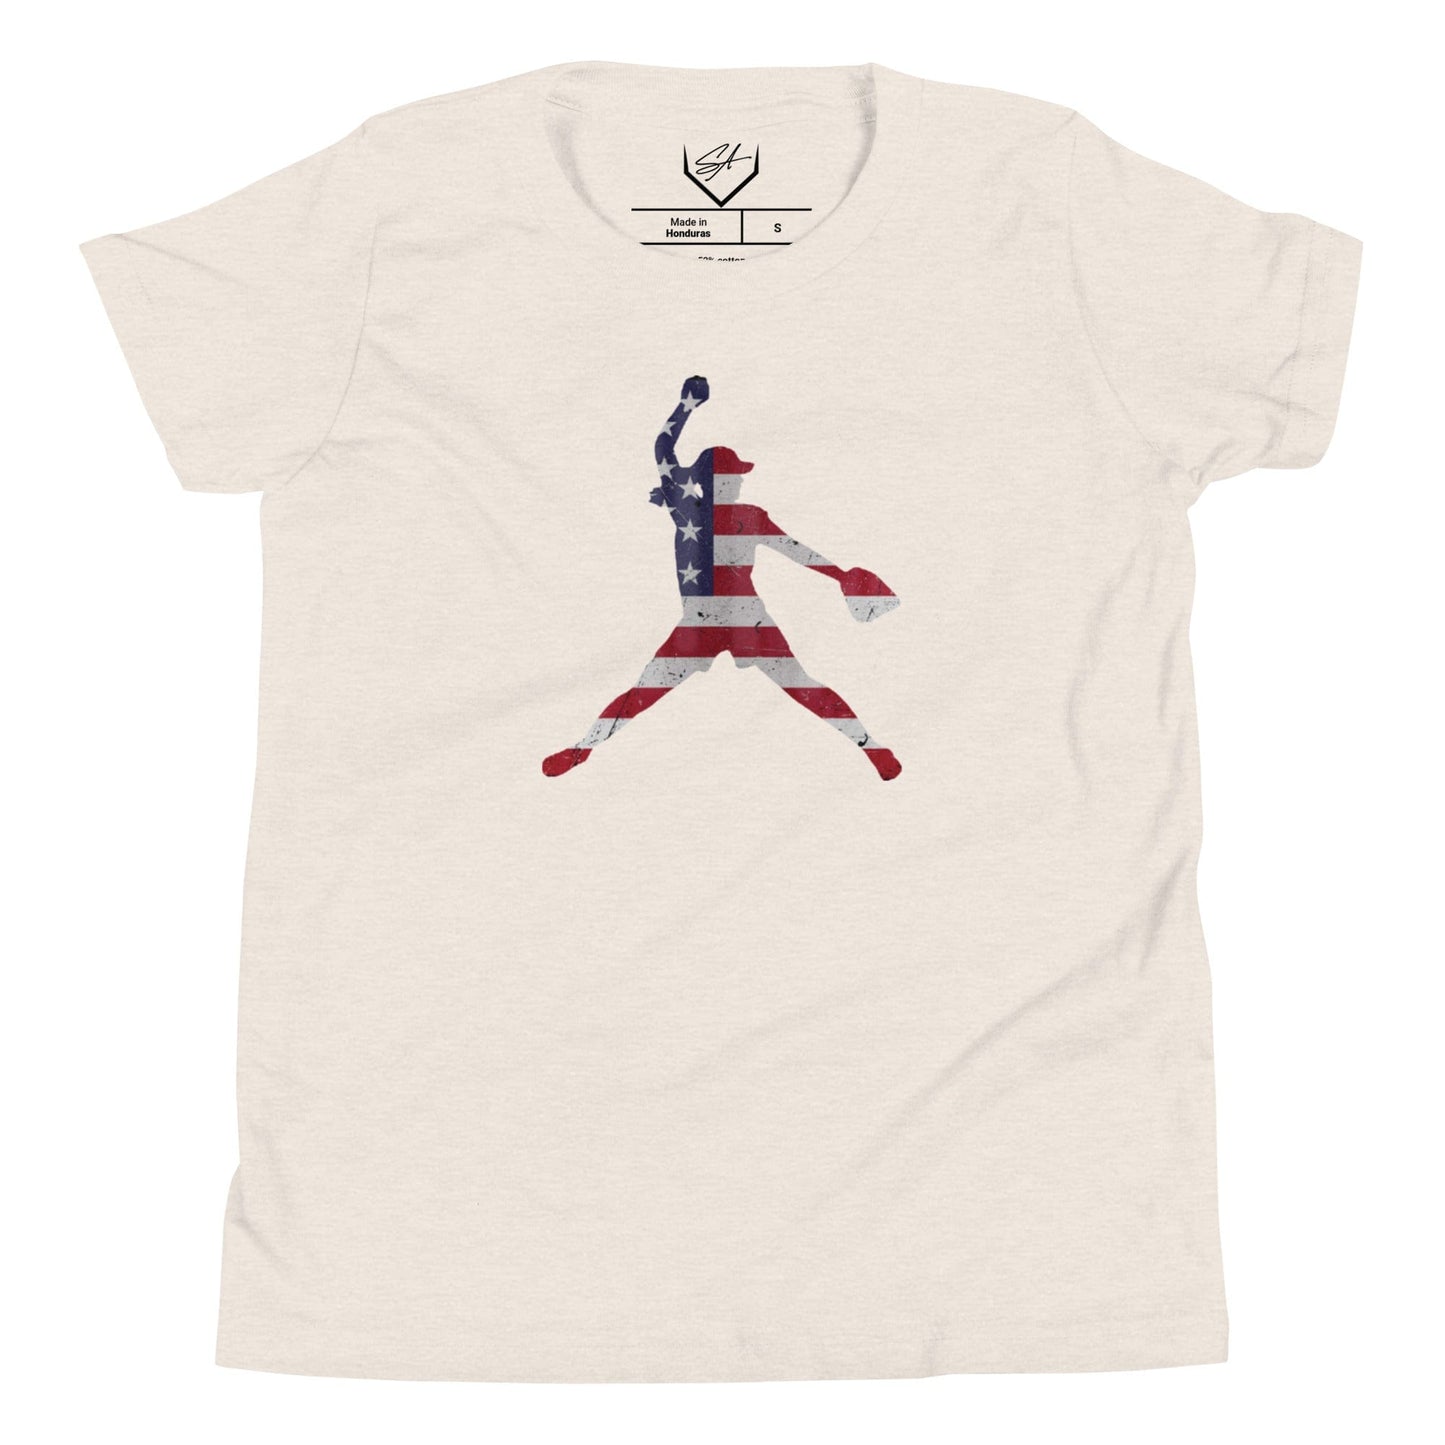 American Flag Softball Pitcher - Youth Tee